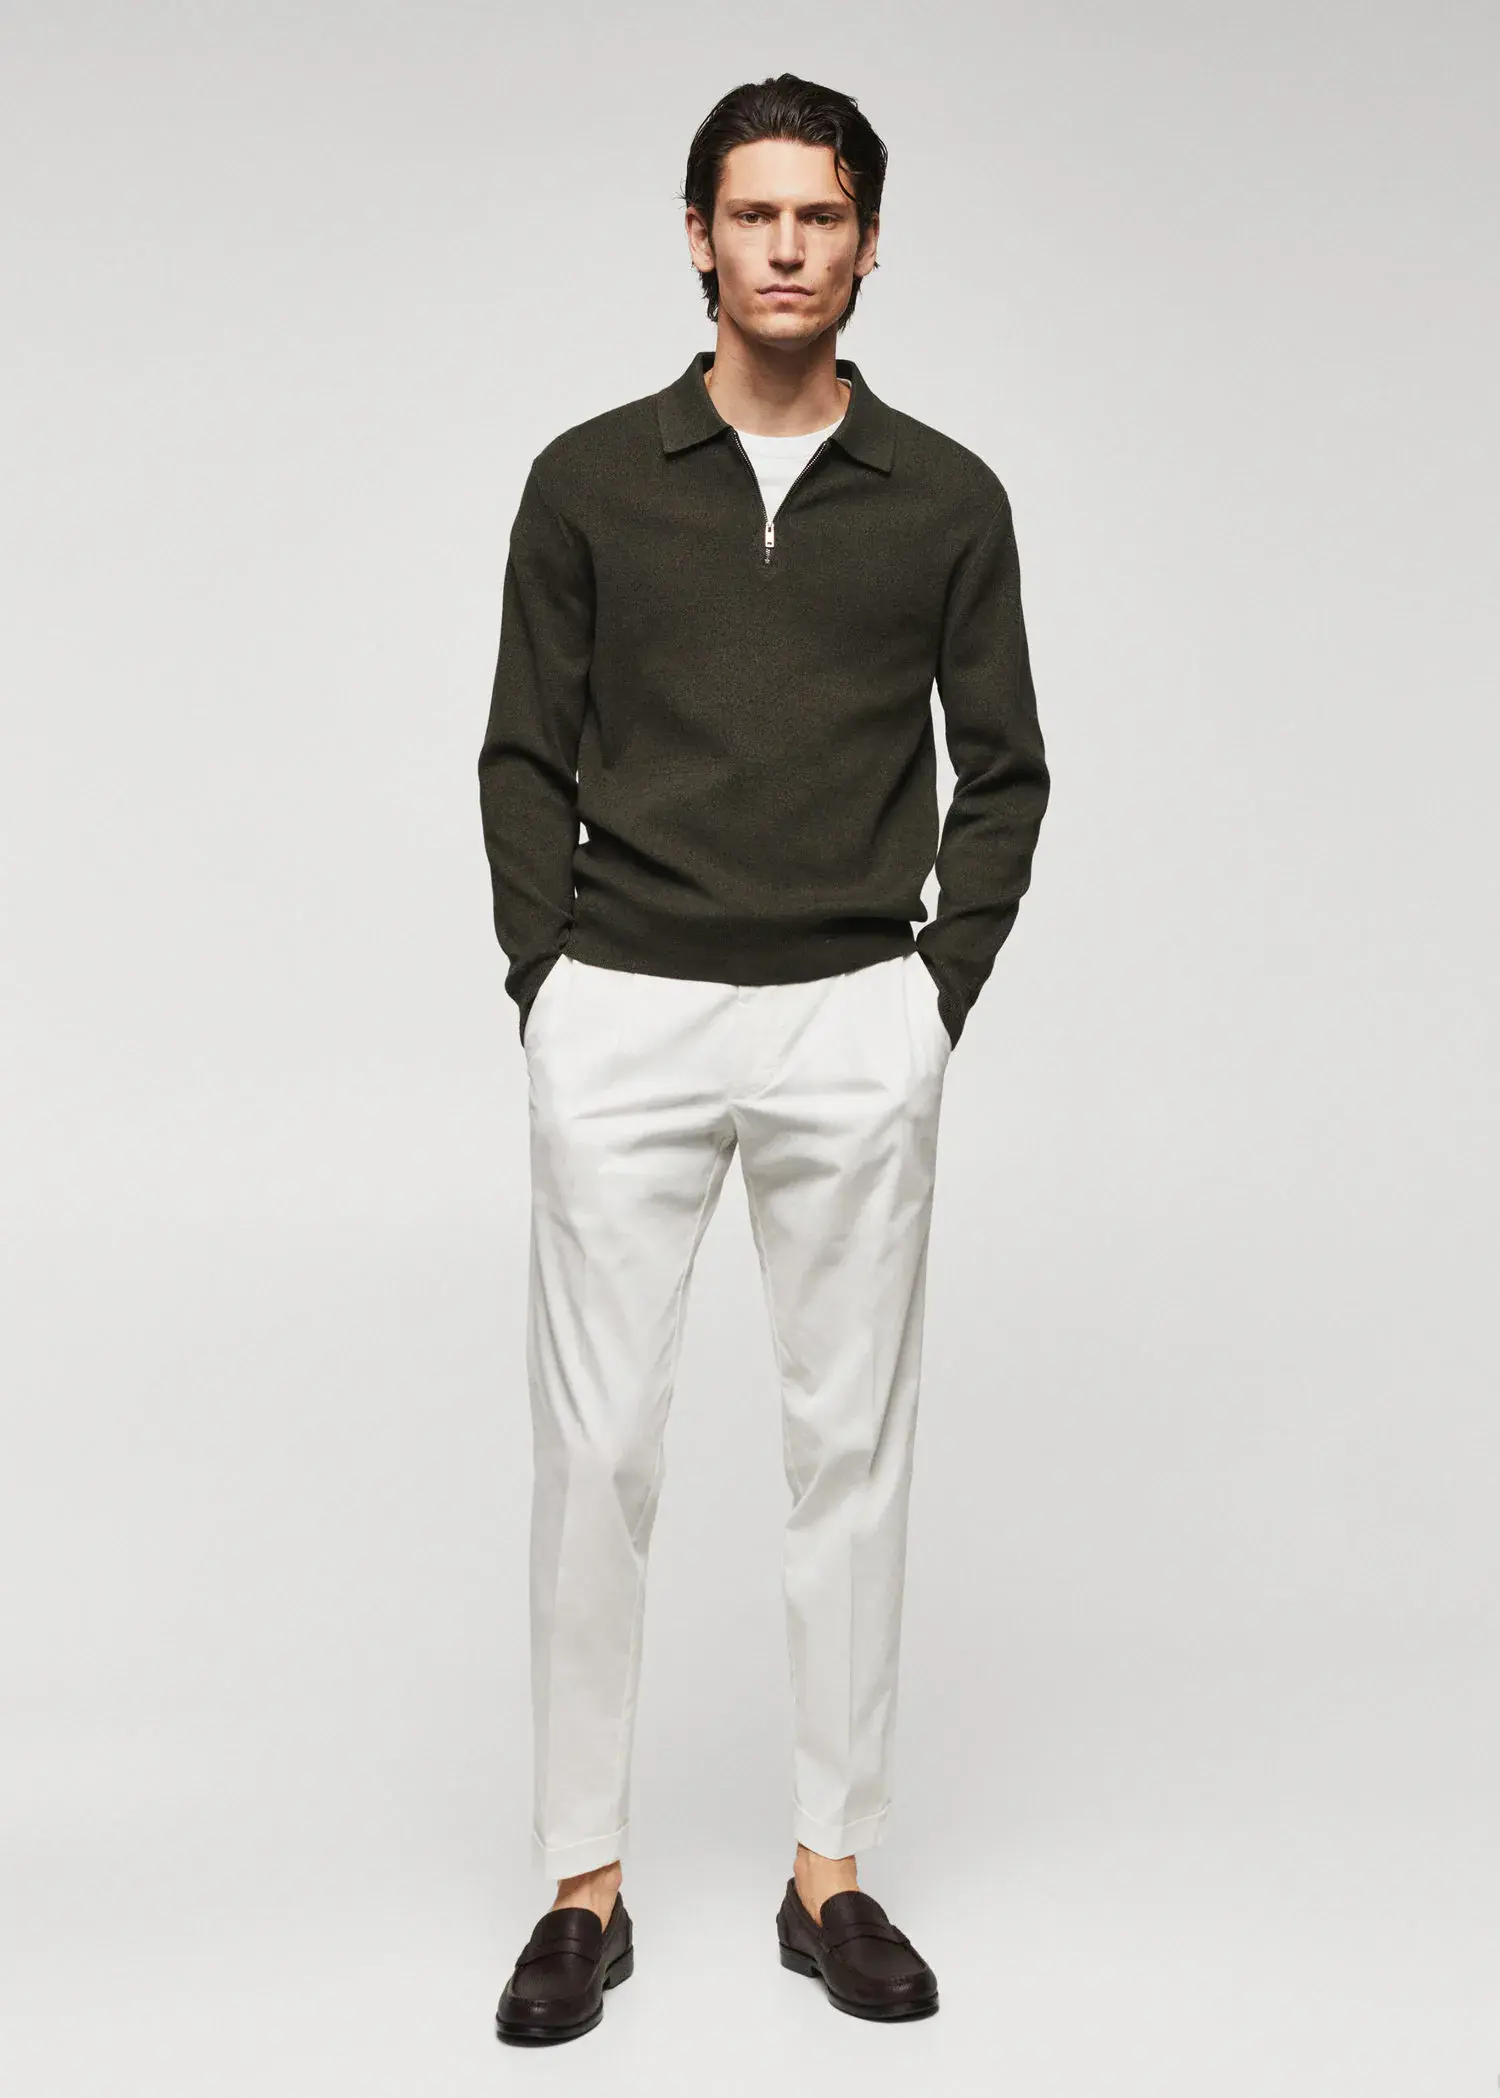 Mango Cotton-knit polo shirt with zipper. 2